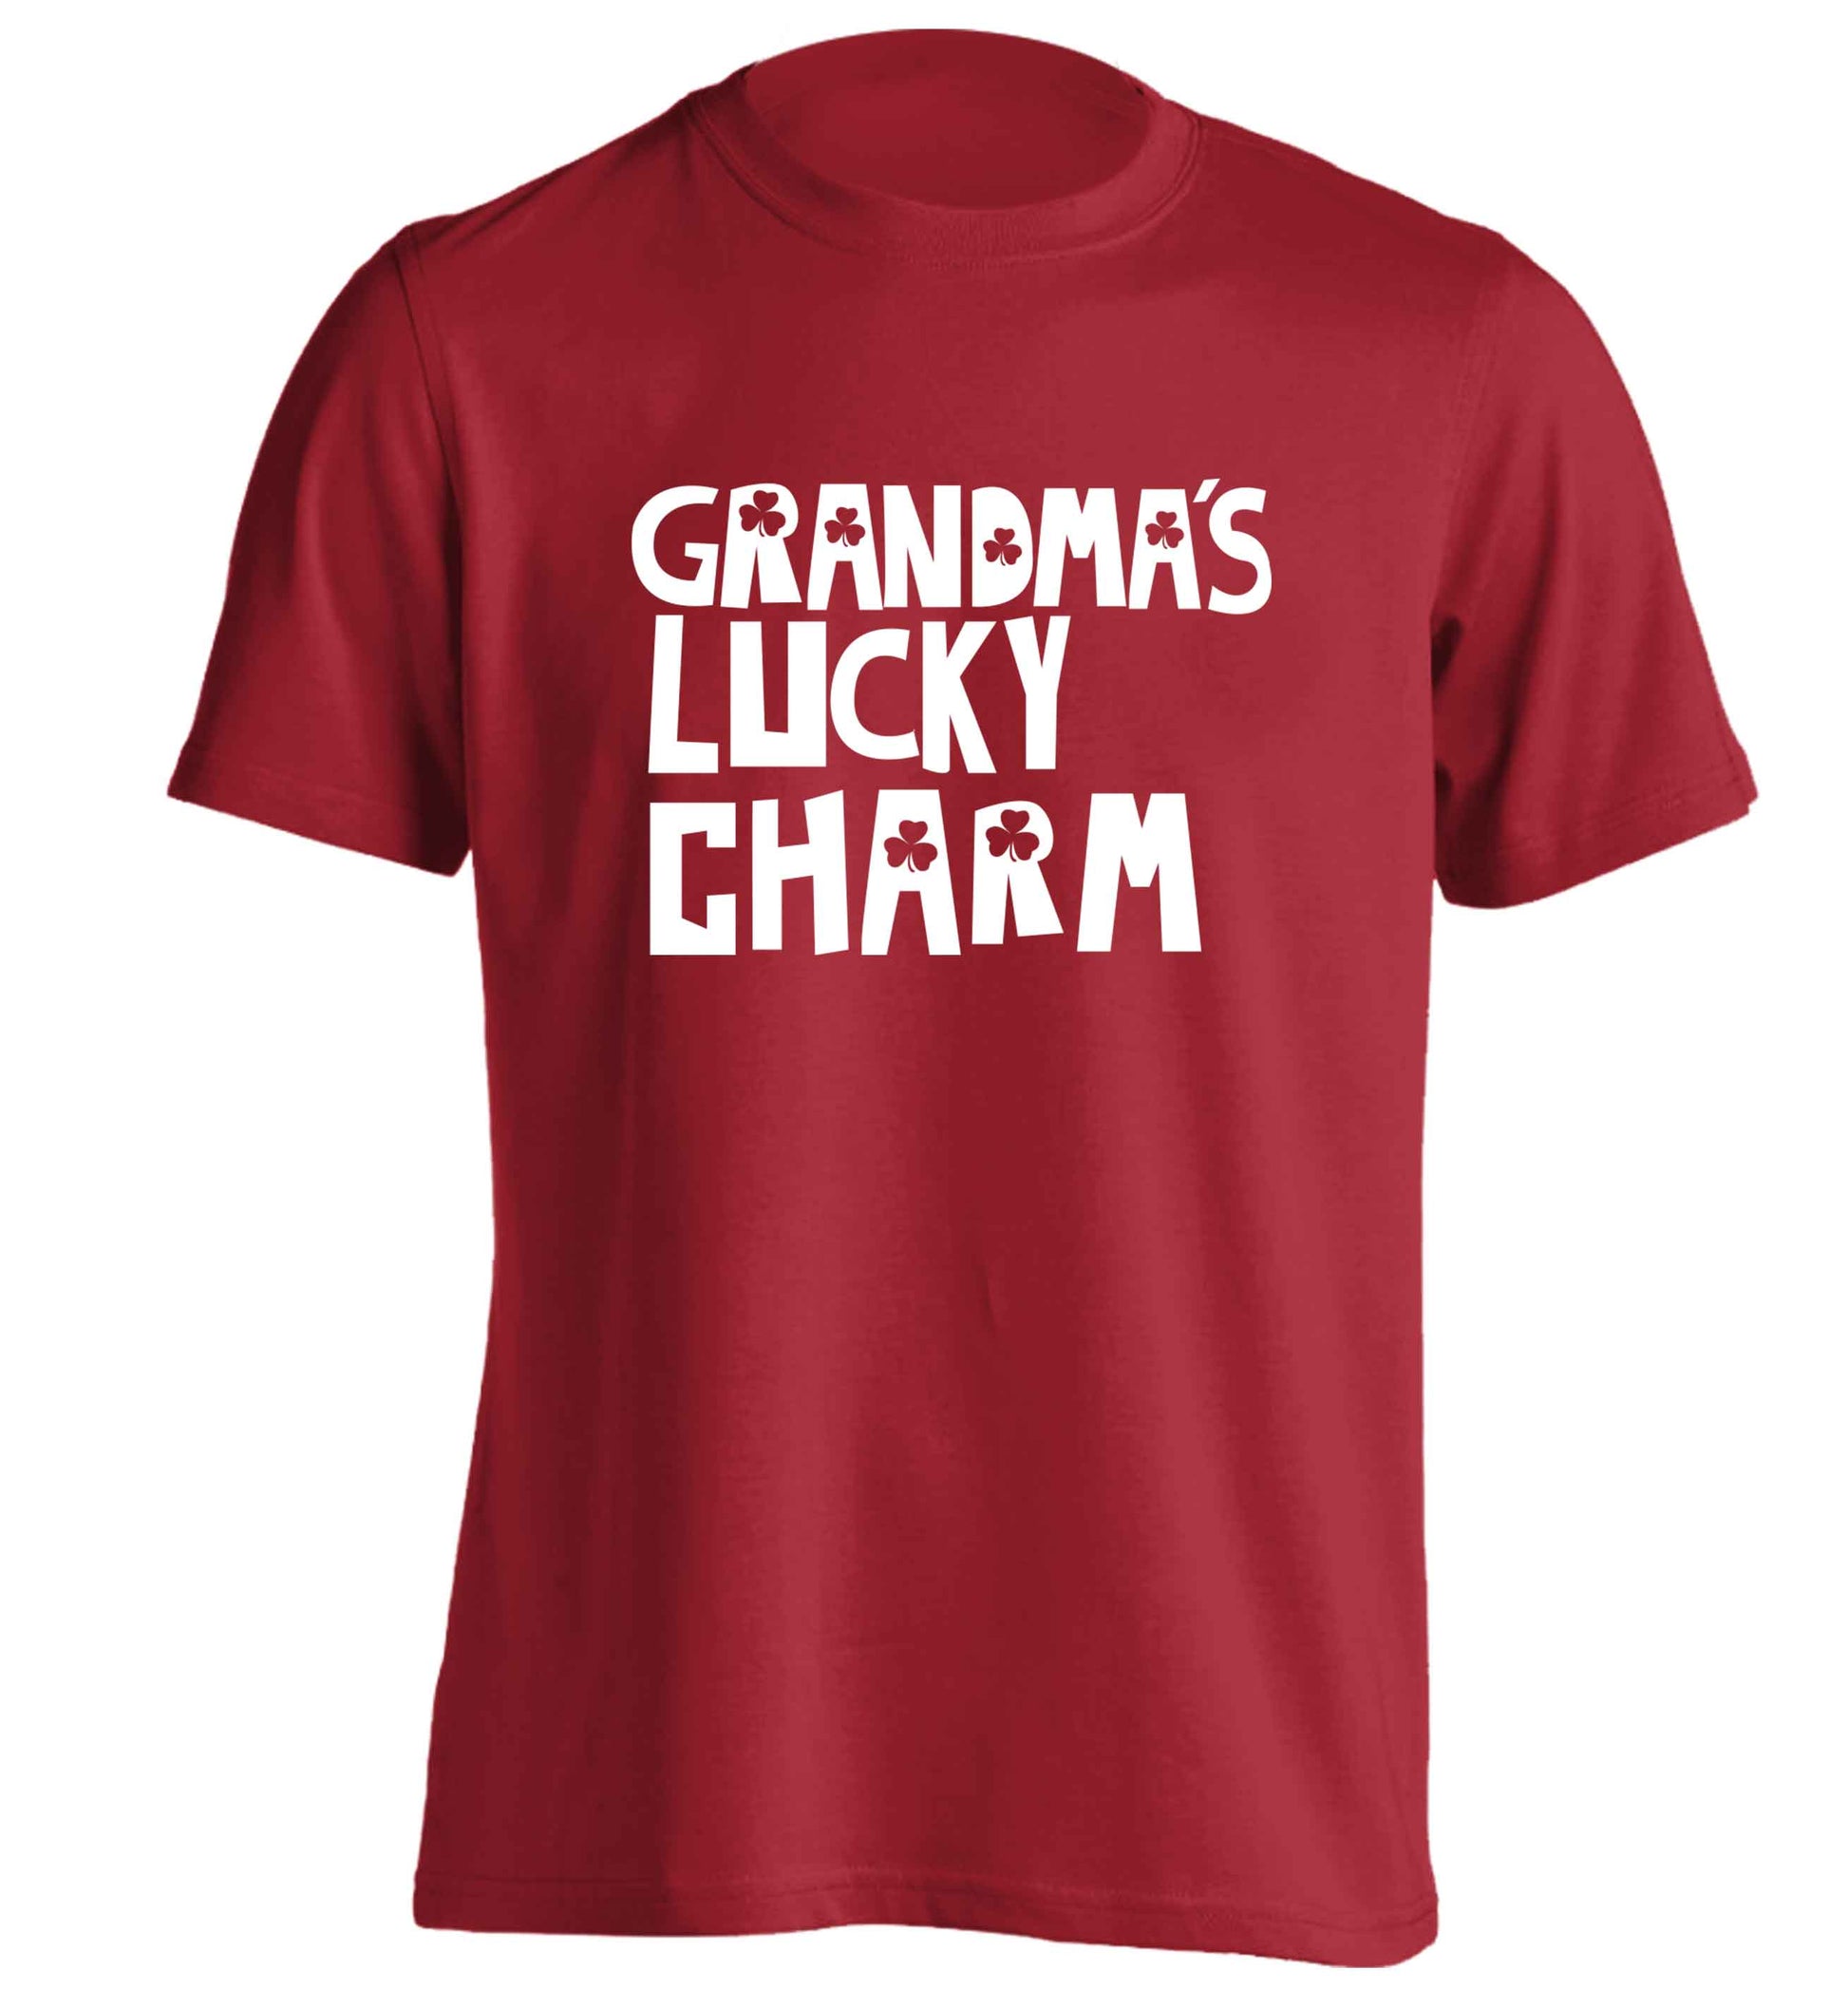 Grandma's lucky charm adults unisex red Tshirt 2XL